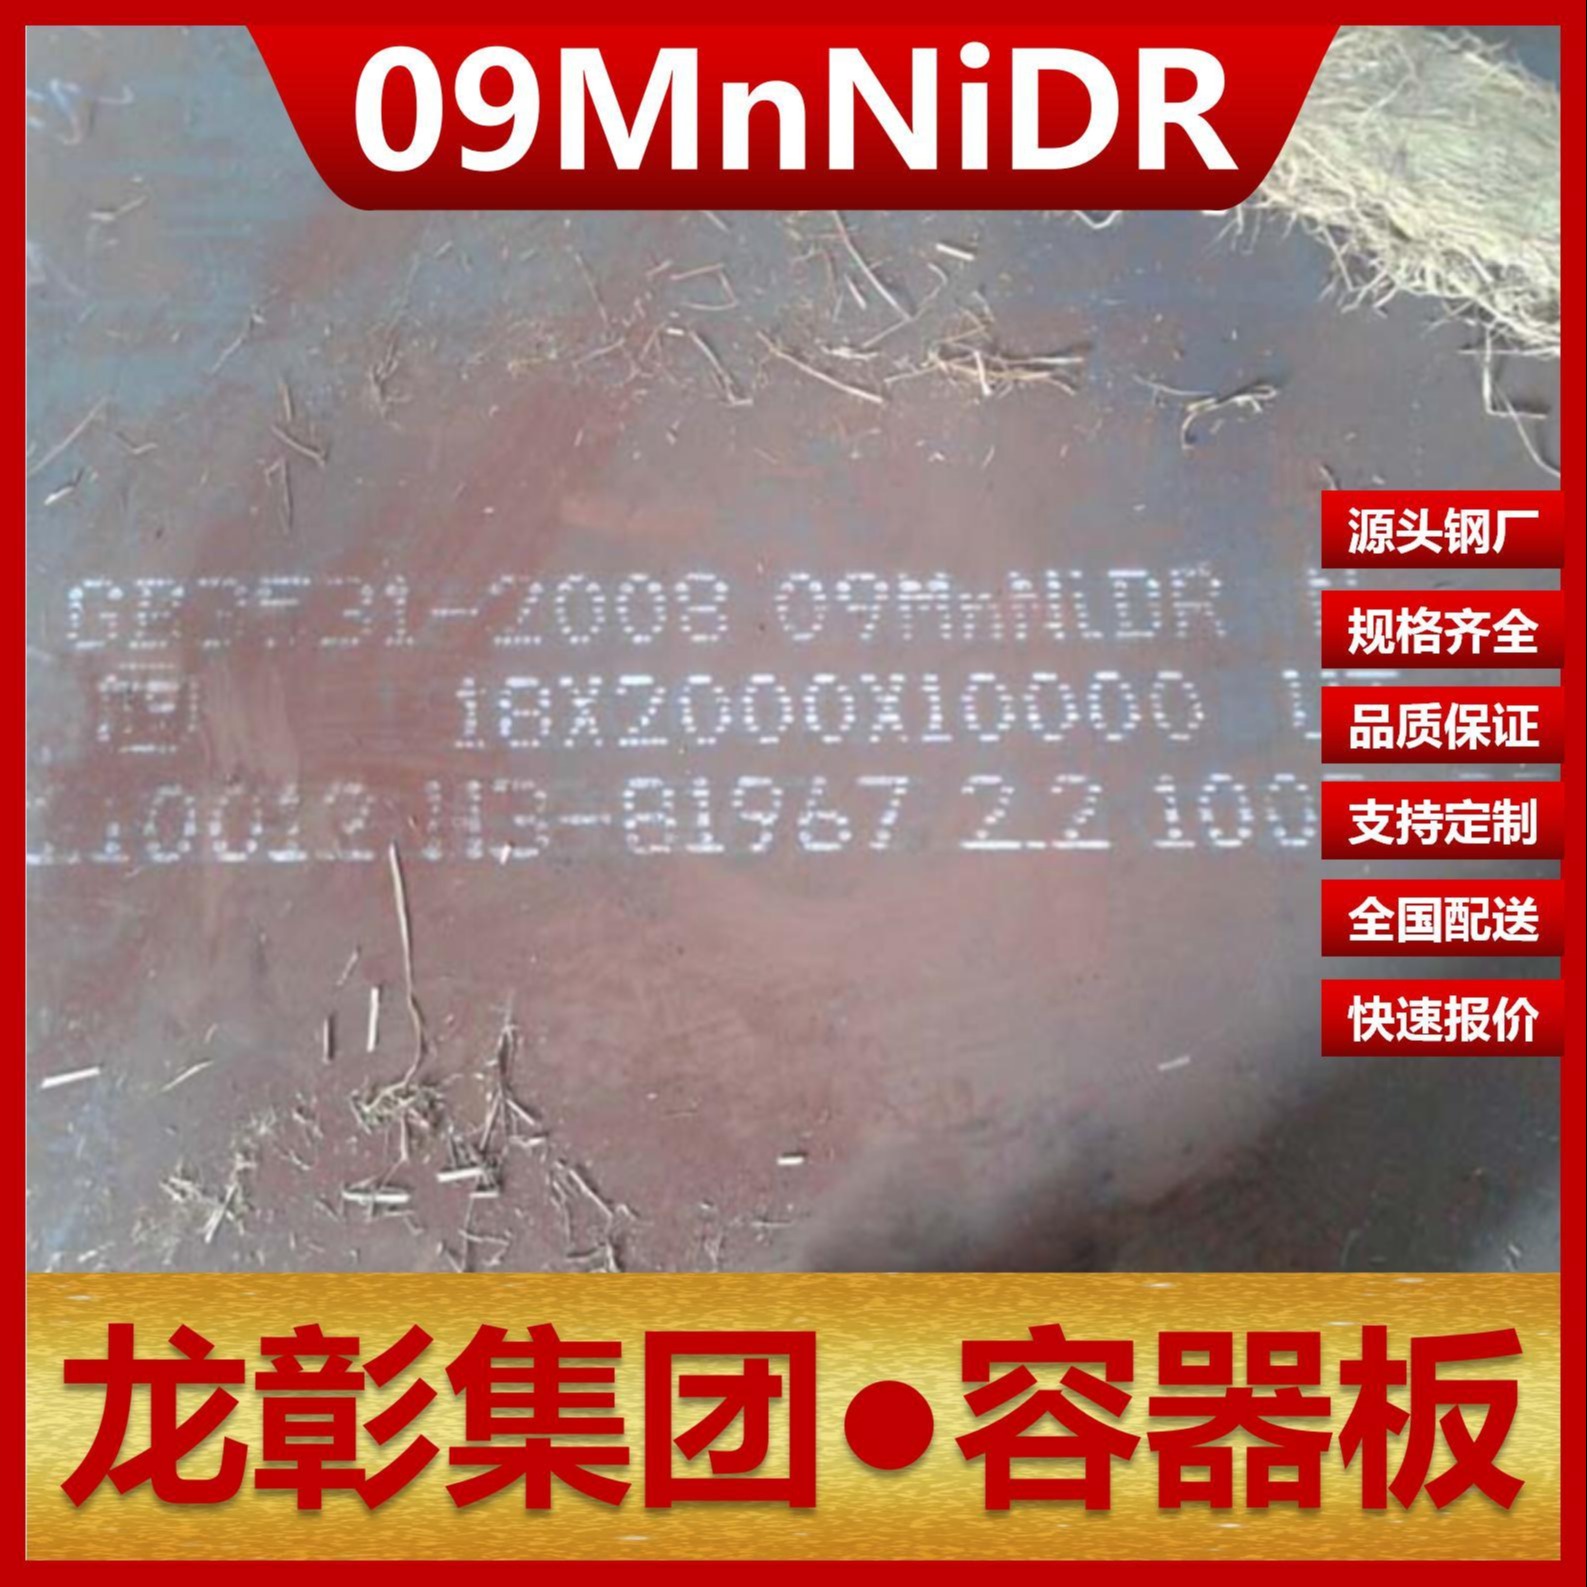 09MnNiDR容器板现货批零 龙彰集团主营钢板09MnNiDR压力容器板可开平分条